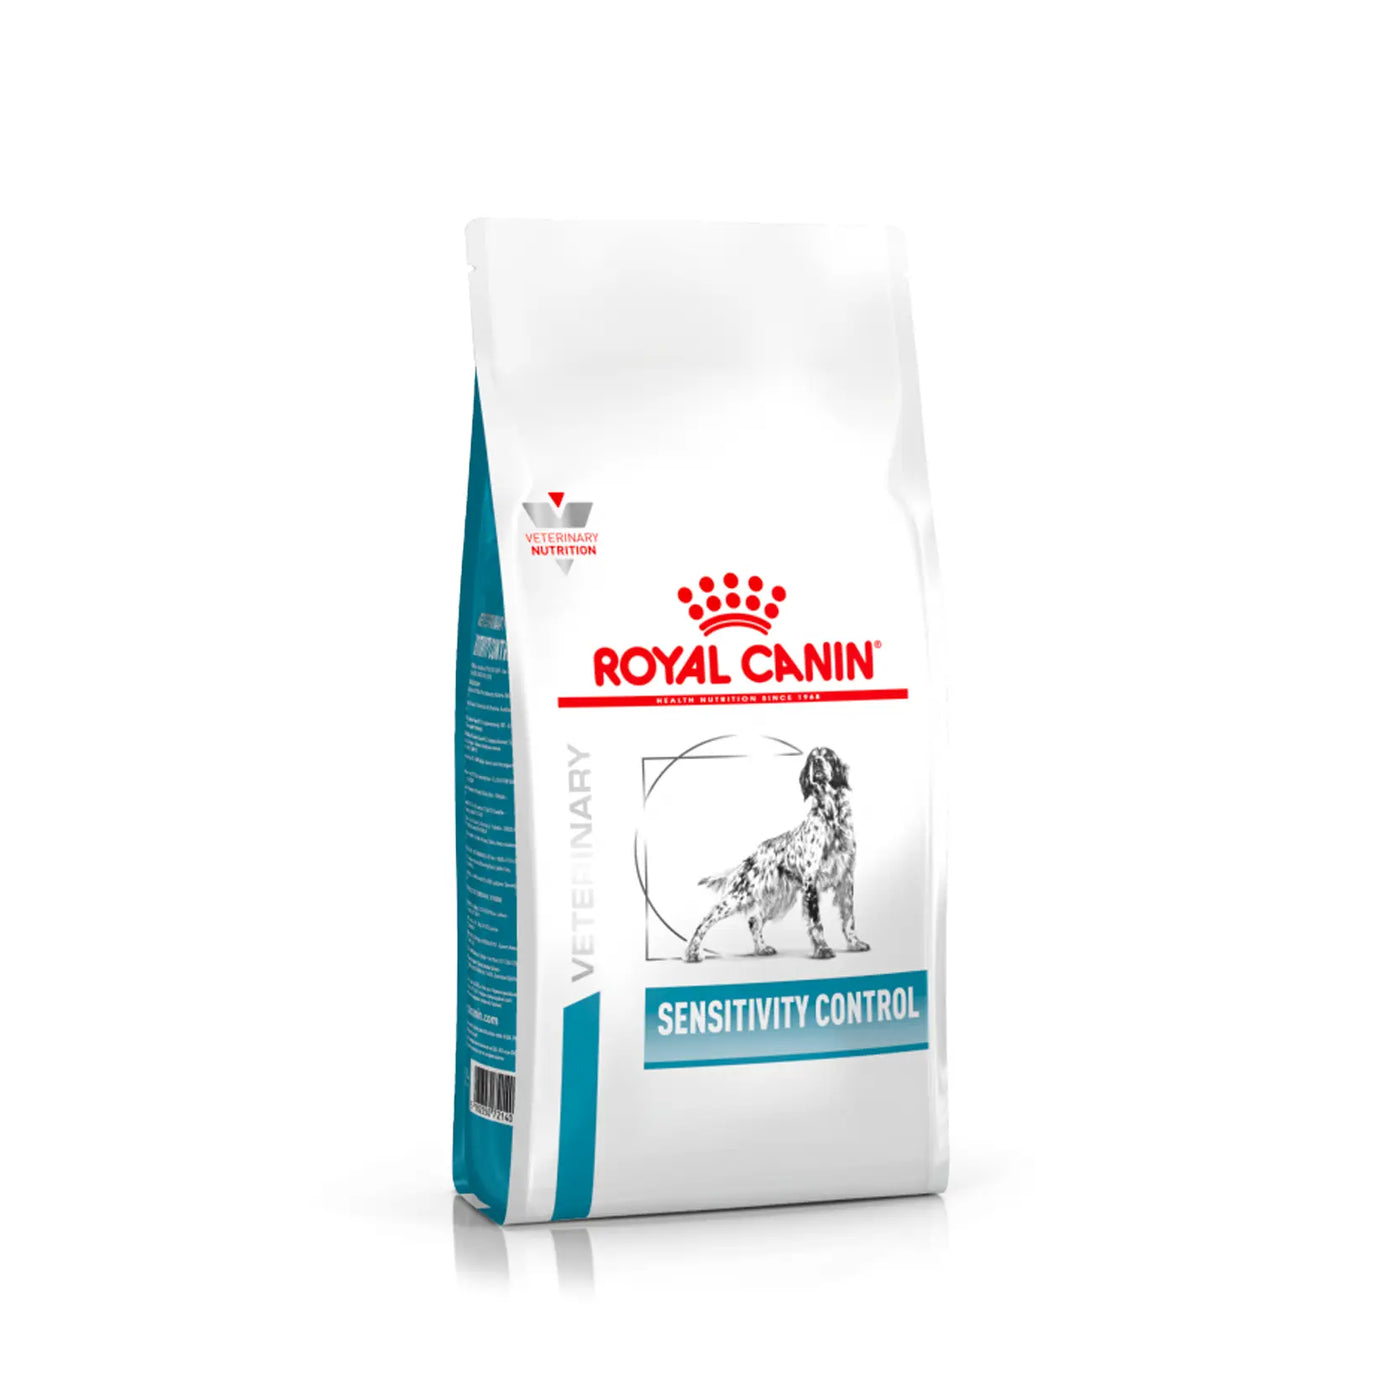 Royal Canin - Canine Sensitivity Control